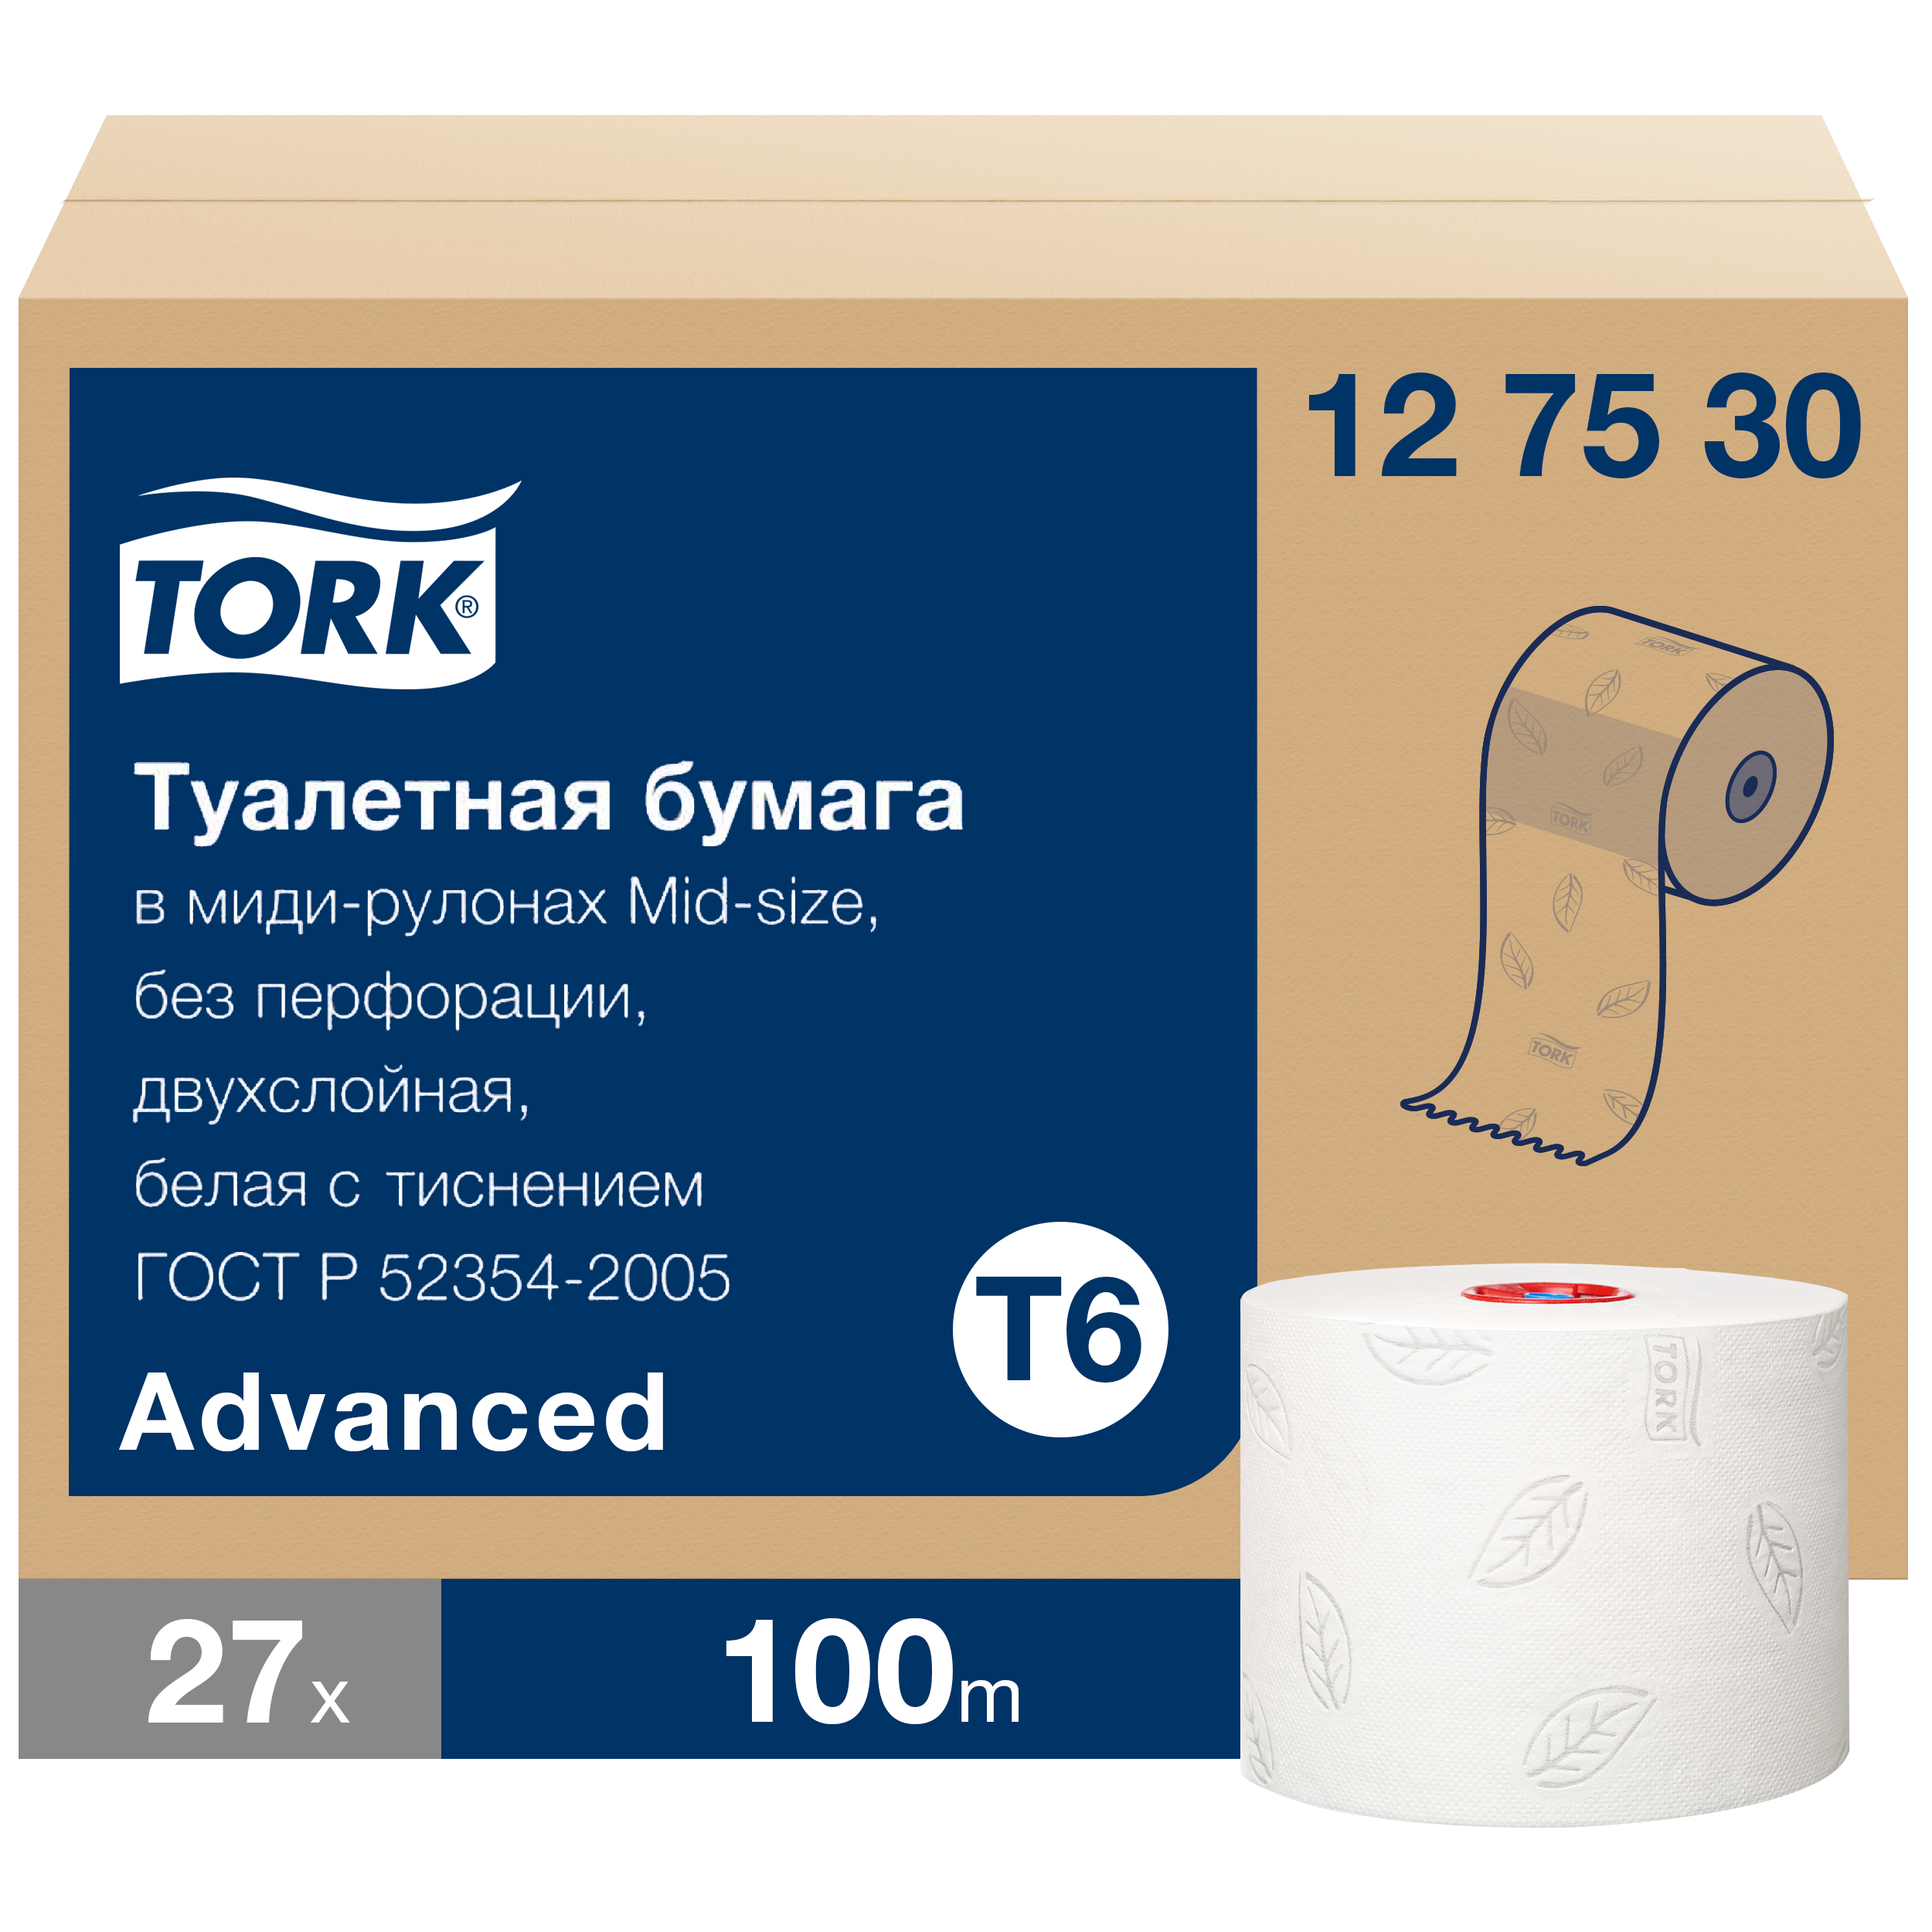 Бумага туалетная Tork Mid-size Advanced в рулонах, T6, 2 слоя, 100м, 27 рулонов туалетная бумага снежок 57 метров со втулкой 1 слой 24 шт